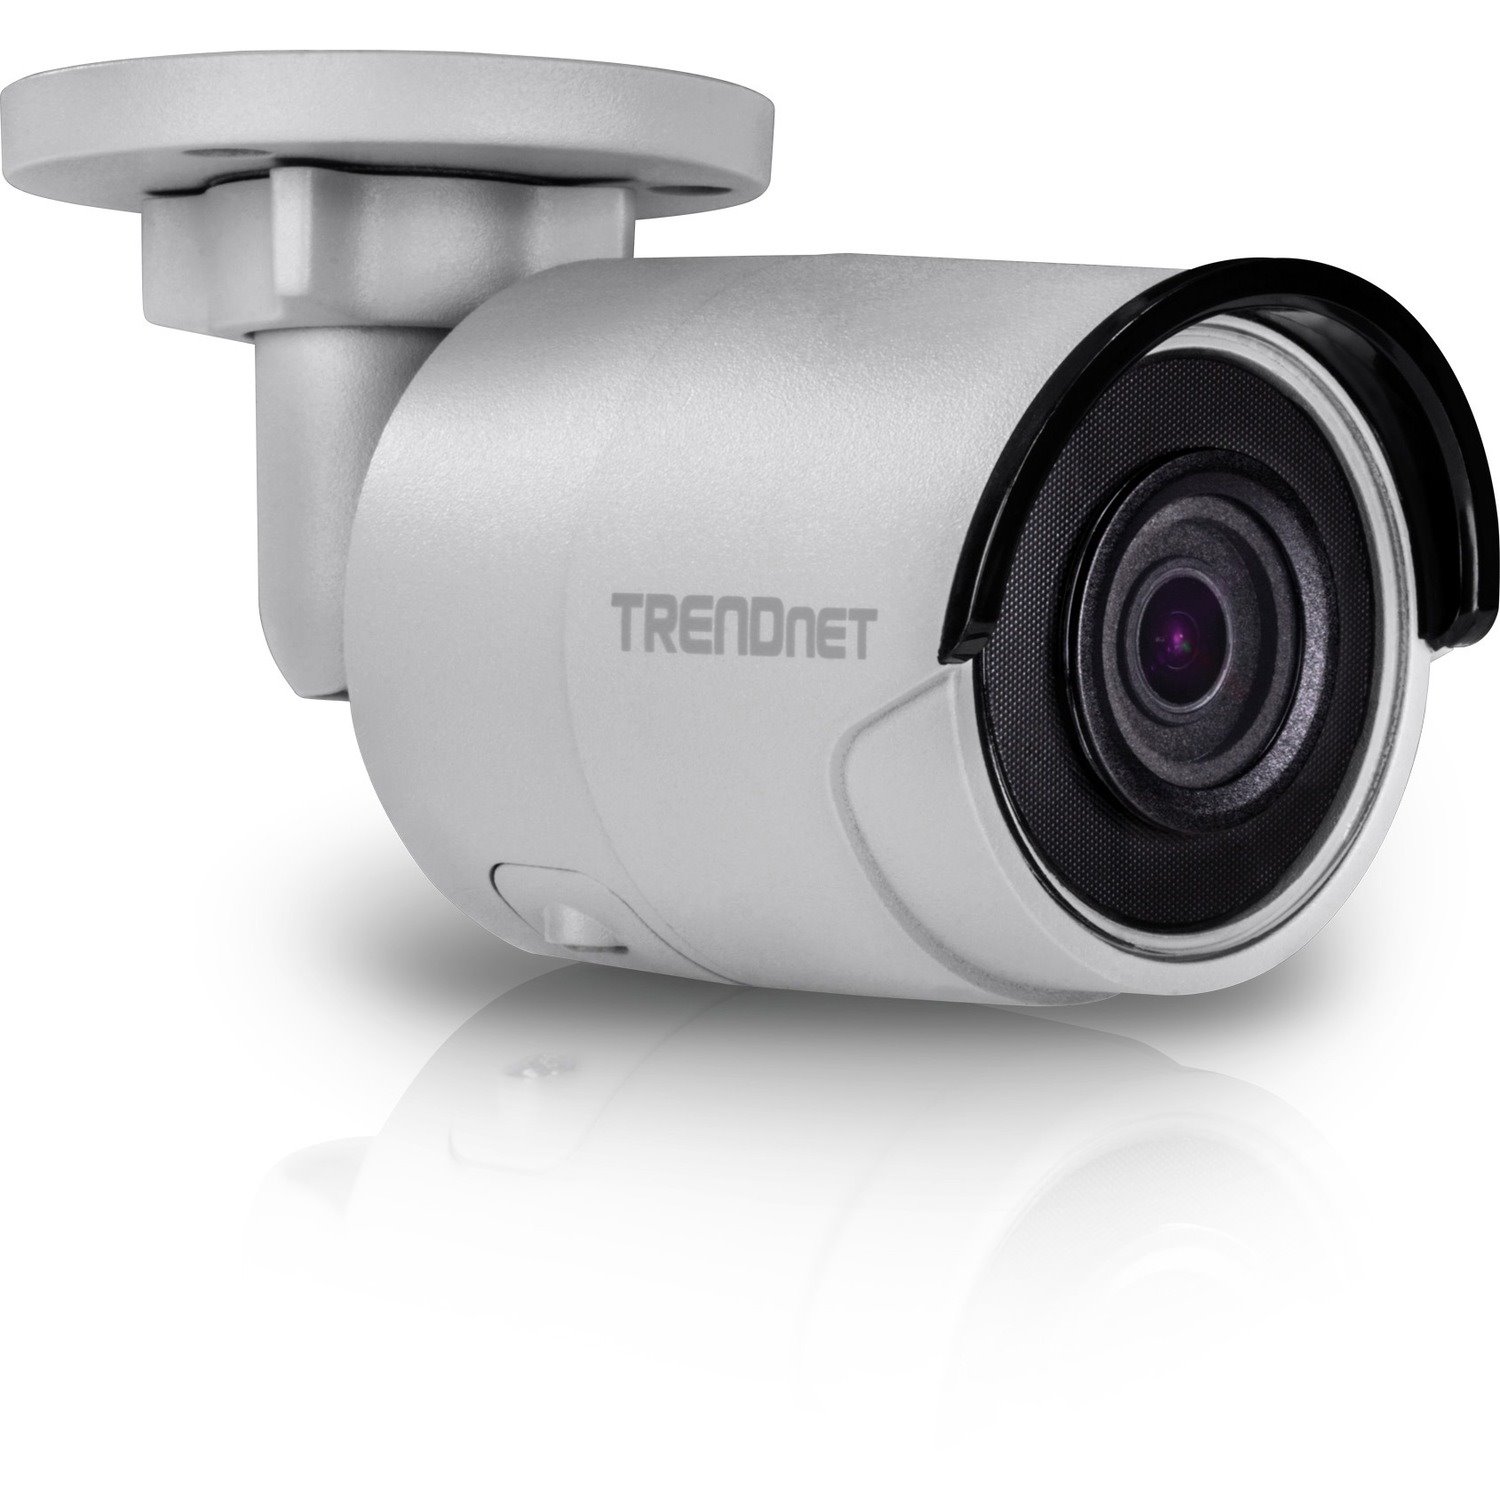 TRENDnet TV-IP1318PI 8 Megapixel Indoor/Outdoor HD Network Camera - Colour - Bullet - White